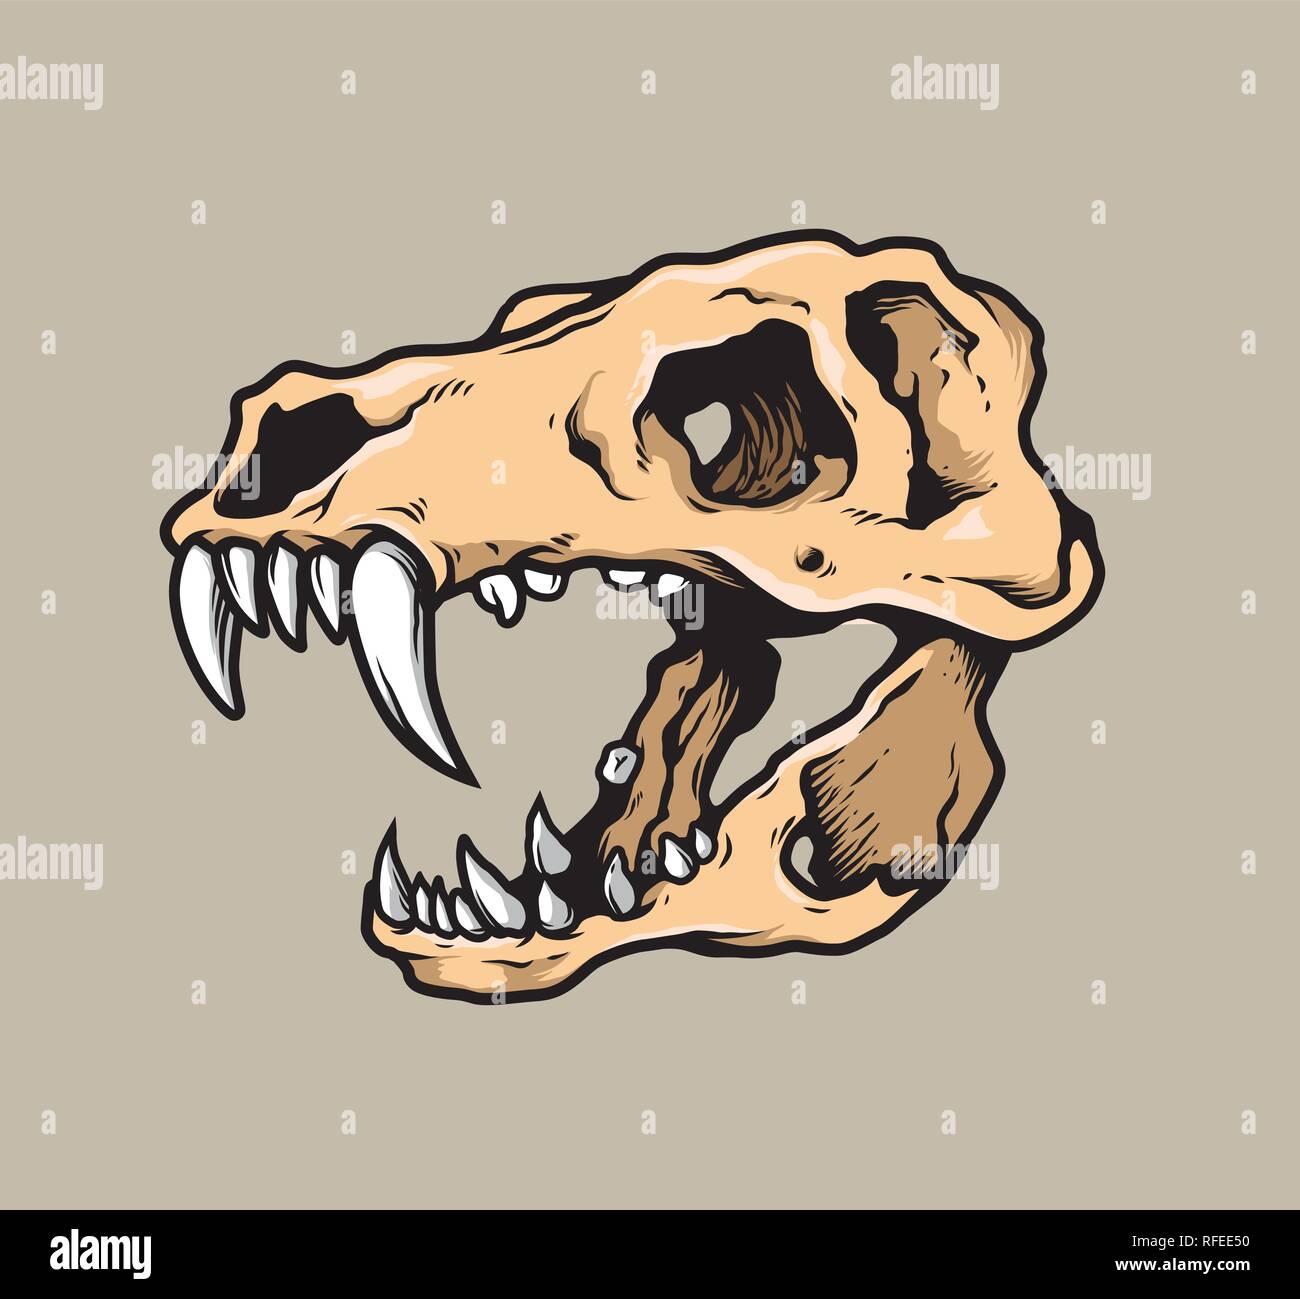 T Rex Skull Illustration Vector Stock Vector Image & Art - Alamy